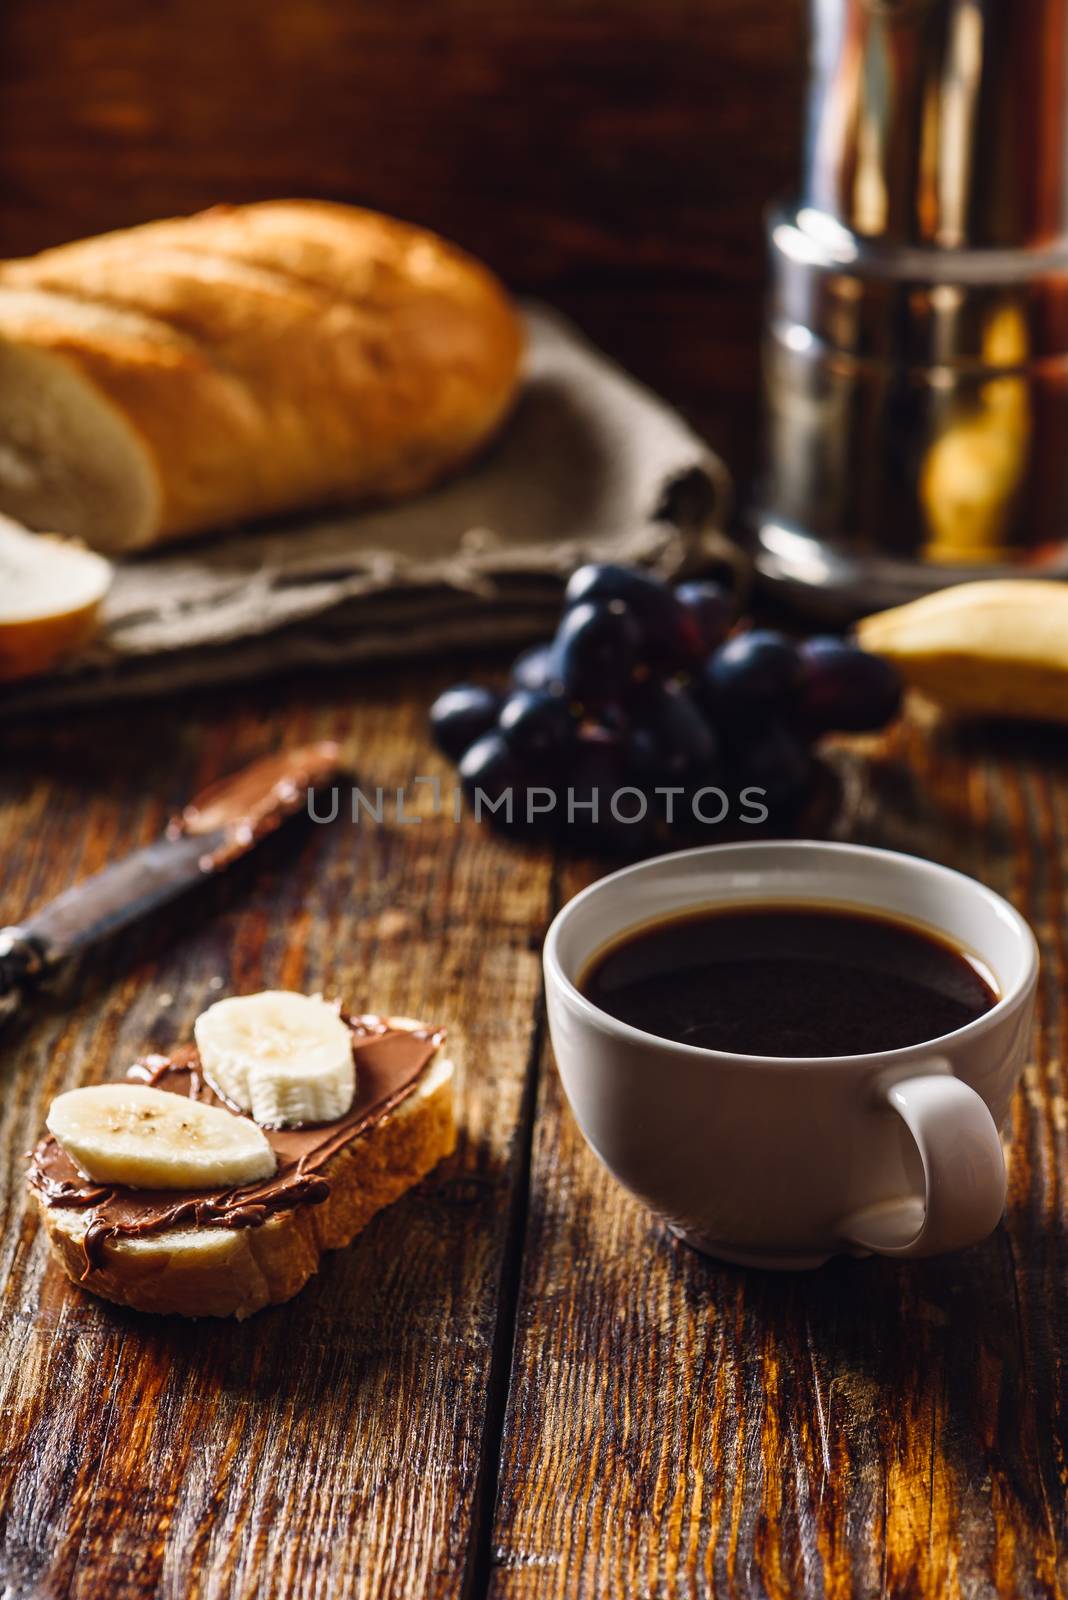 Breakfast with Fruit Sandwich and Coffee. by Seva_blsv